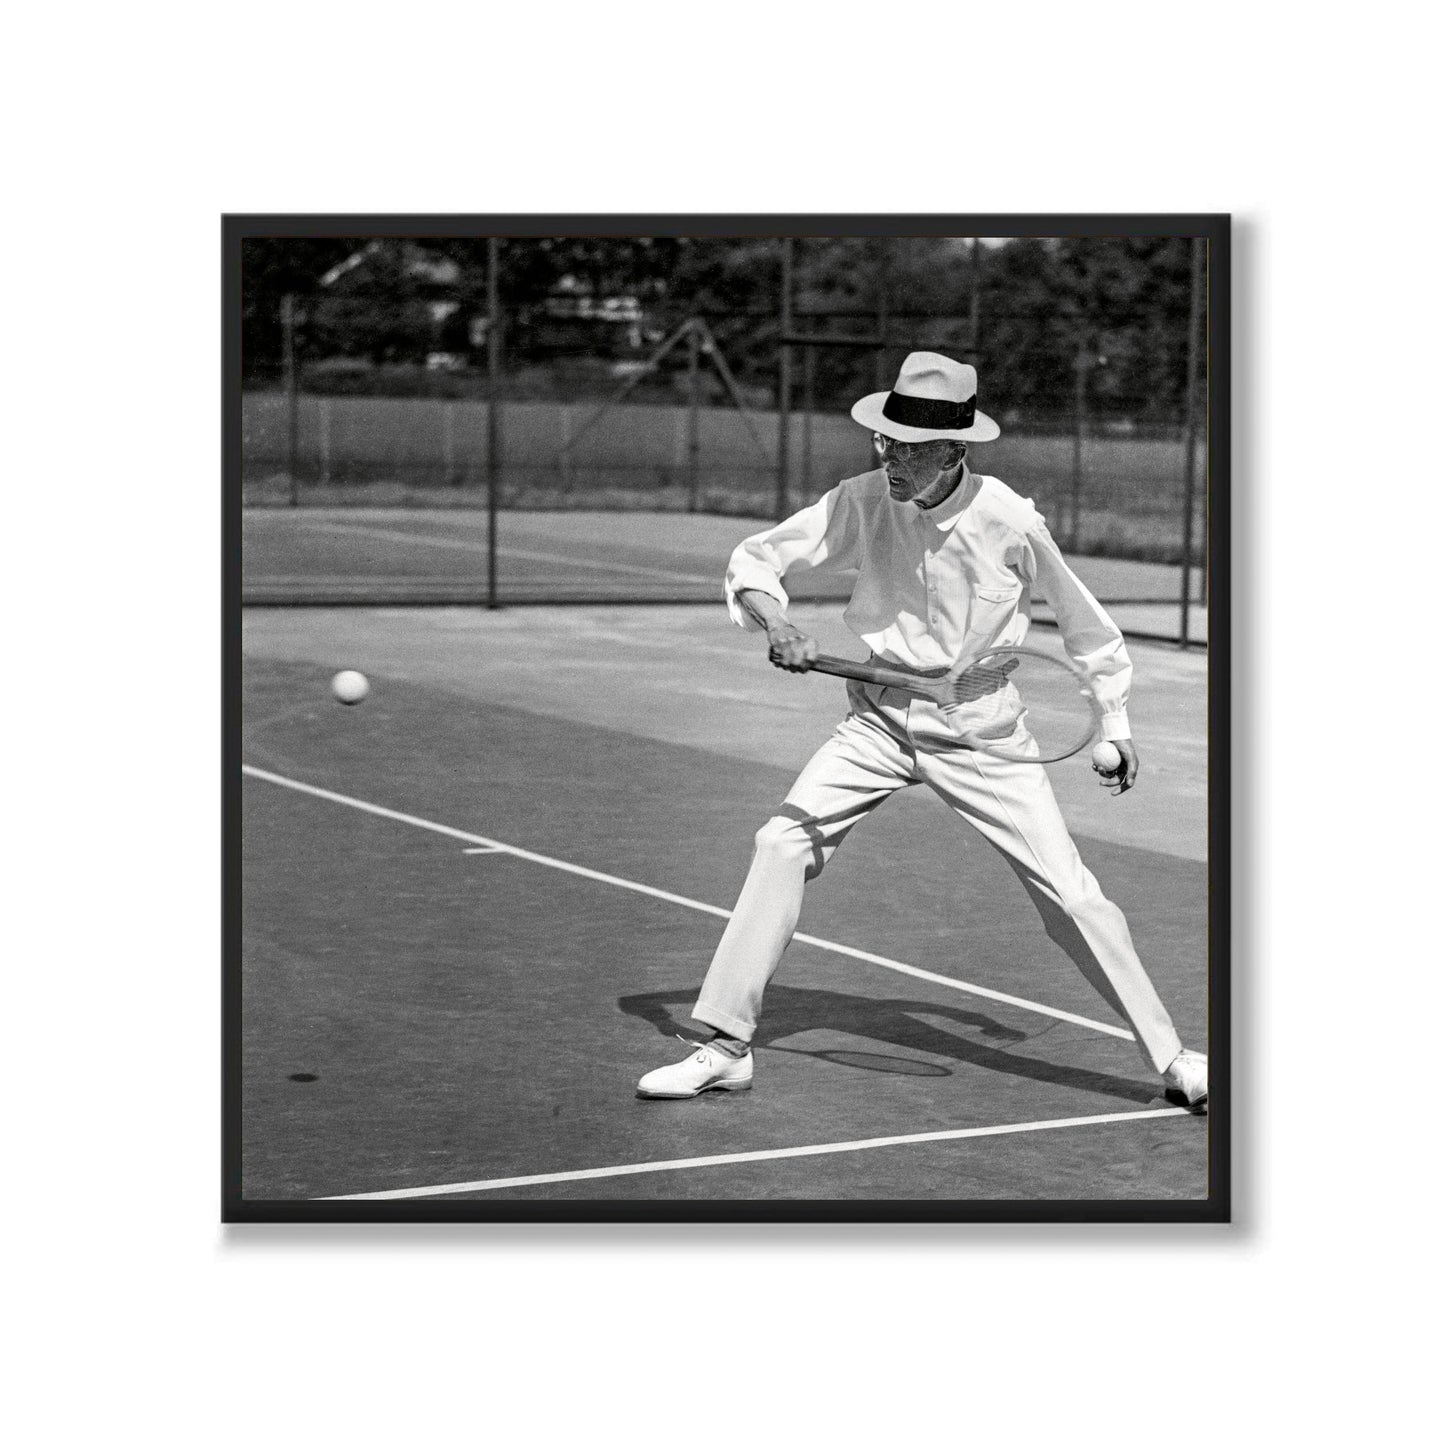 Gustav V plays tennis